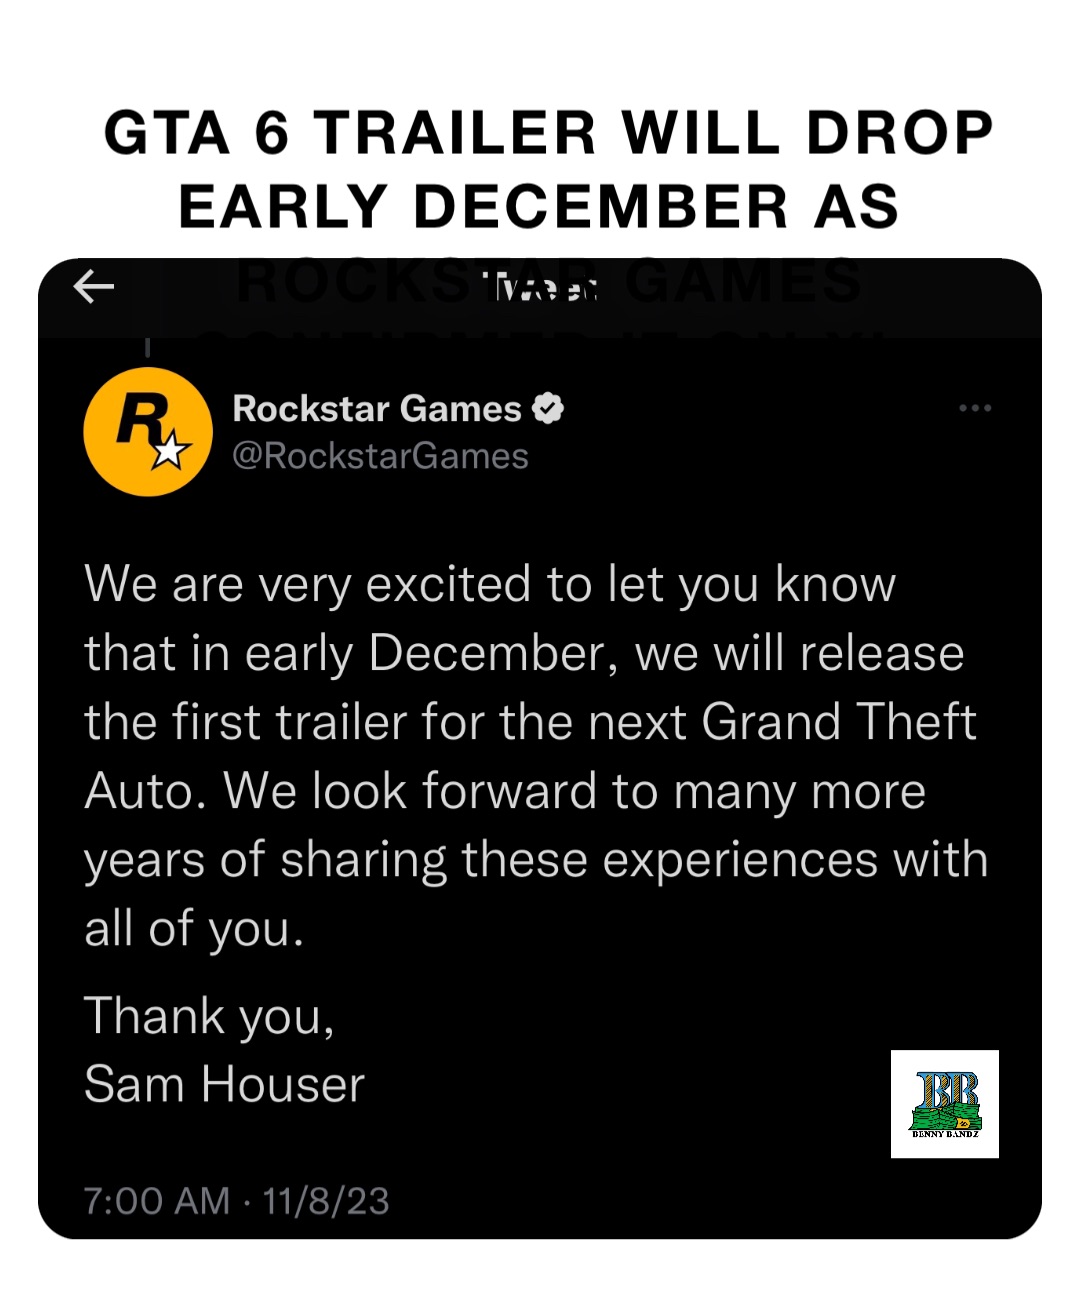 GTA 6 trailer will drop early December as
Rockstar Games confirmed it on XI